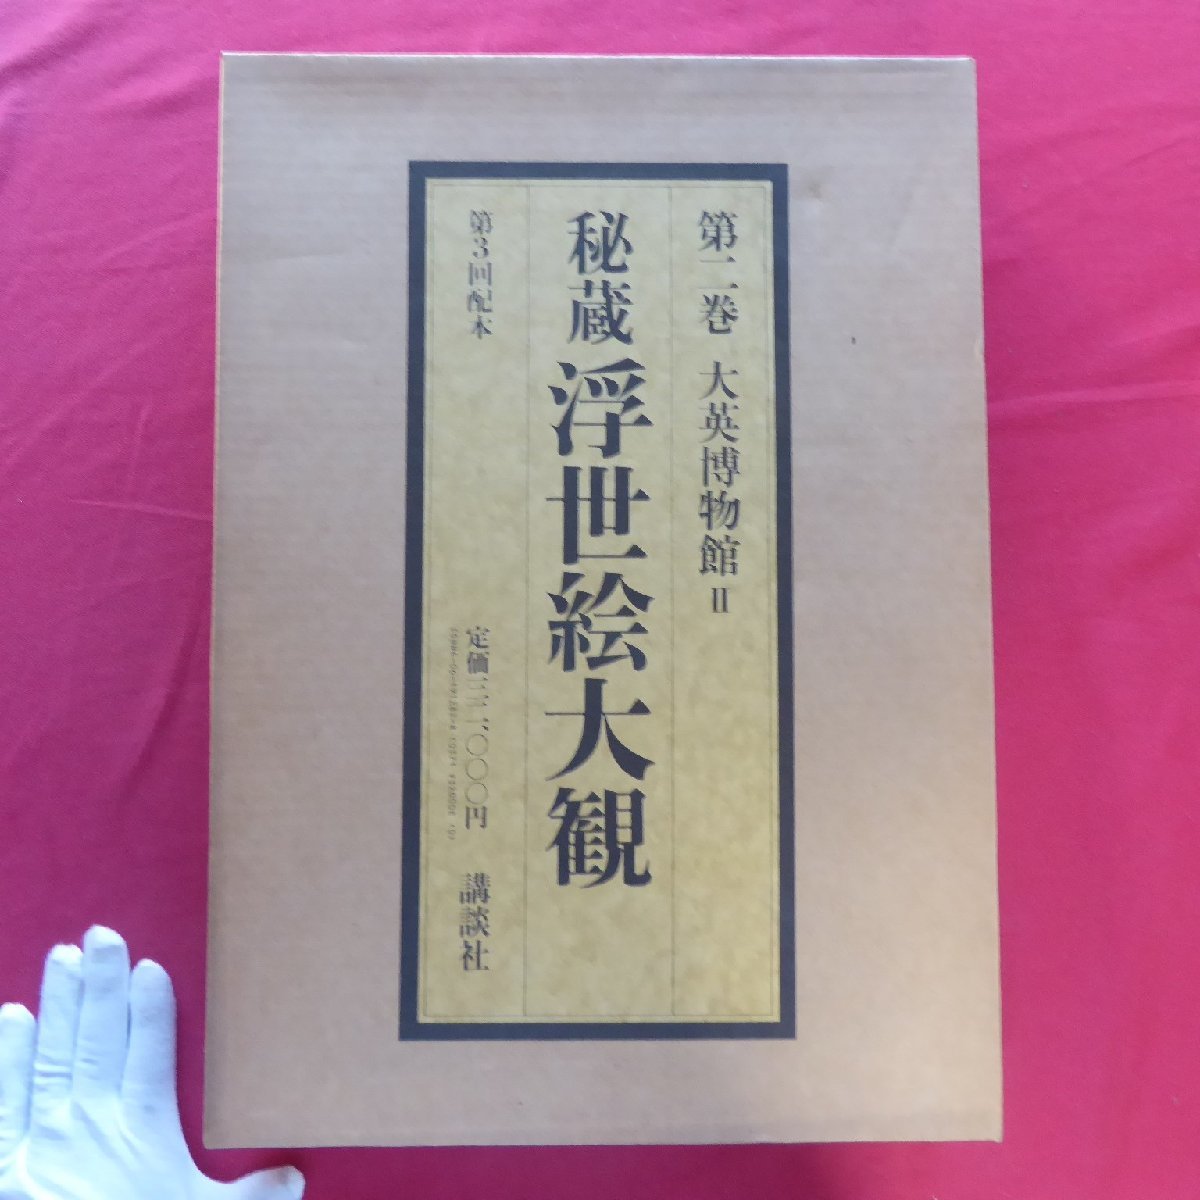 Treasured Ukiyo-e Encyclopedia 2 [British Museum 2/Kodansha, 1987] Hidetake Asano On the Early Ukiyo-e Prints in the British Museum Collection, art, Entertainment, Prints, Sculpture, Collection